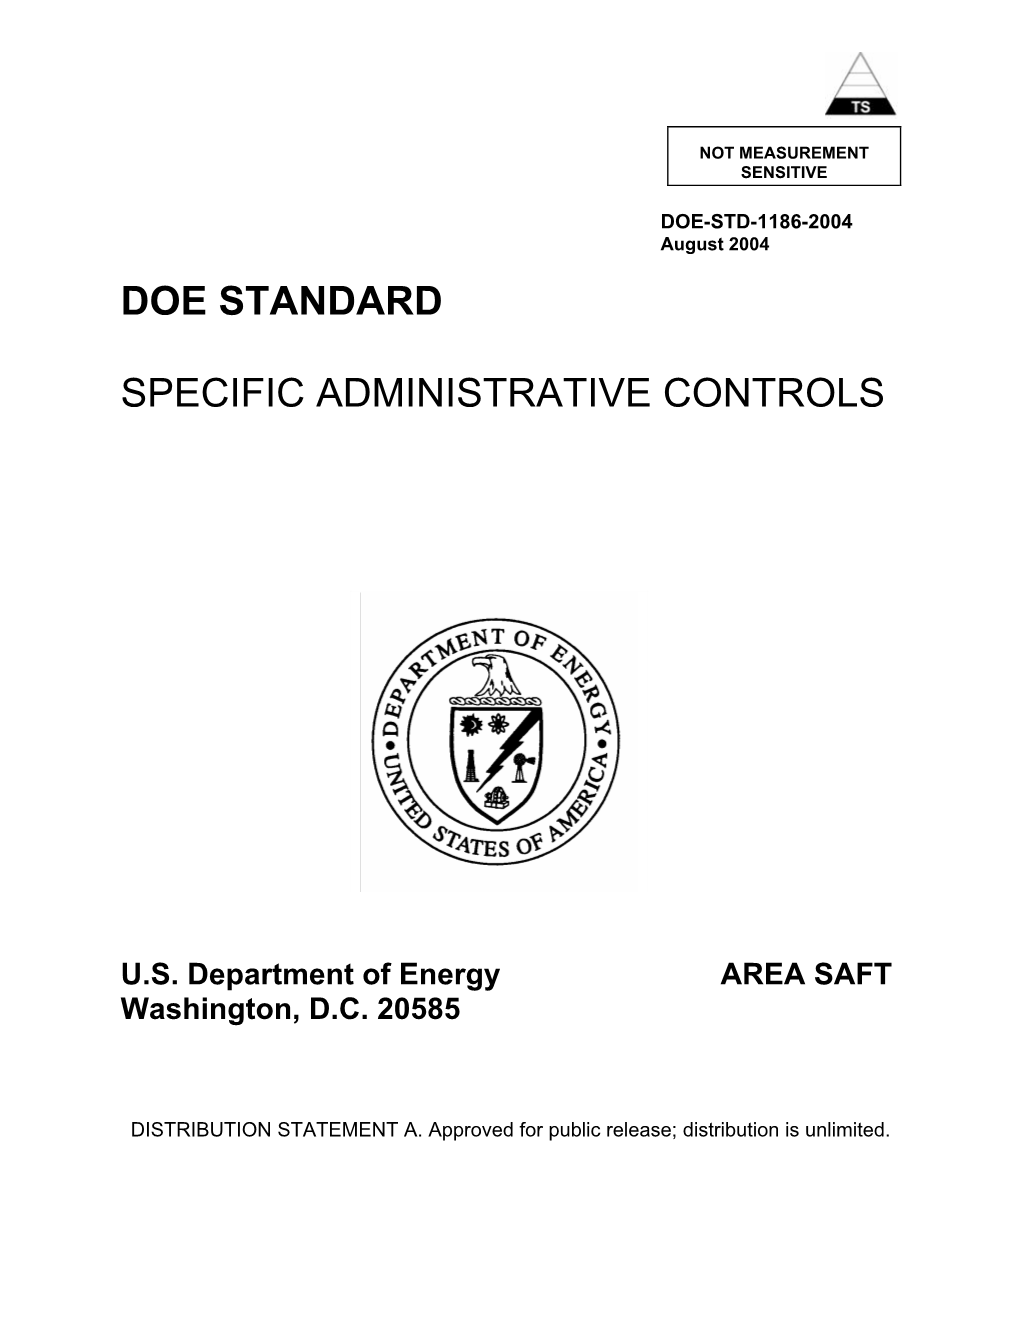 DOE-STD-1186-2004; Specific Administrative Controls